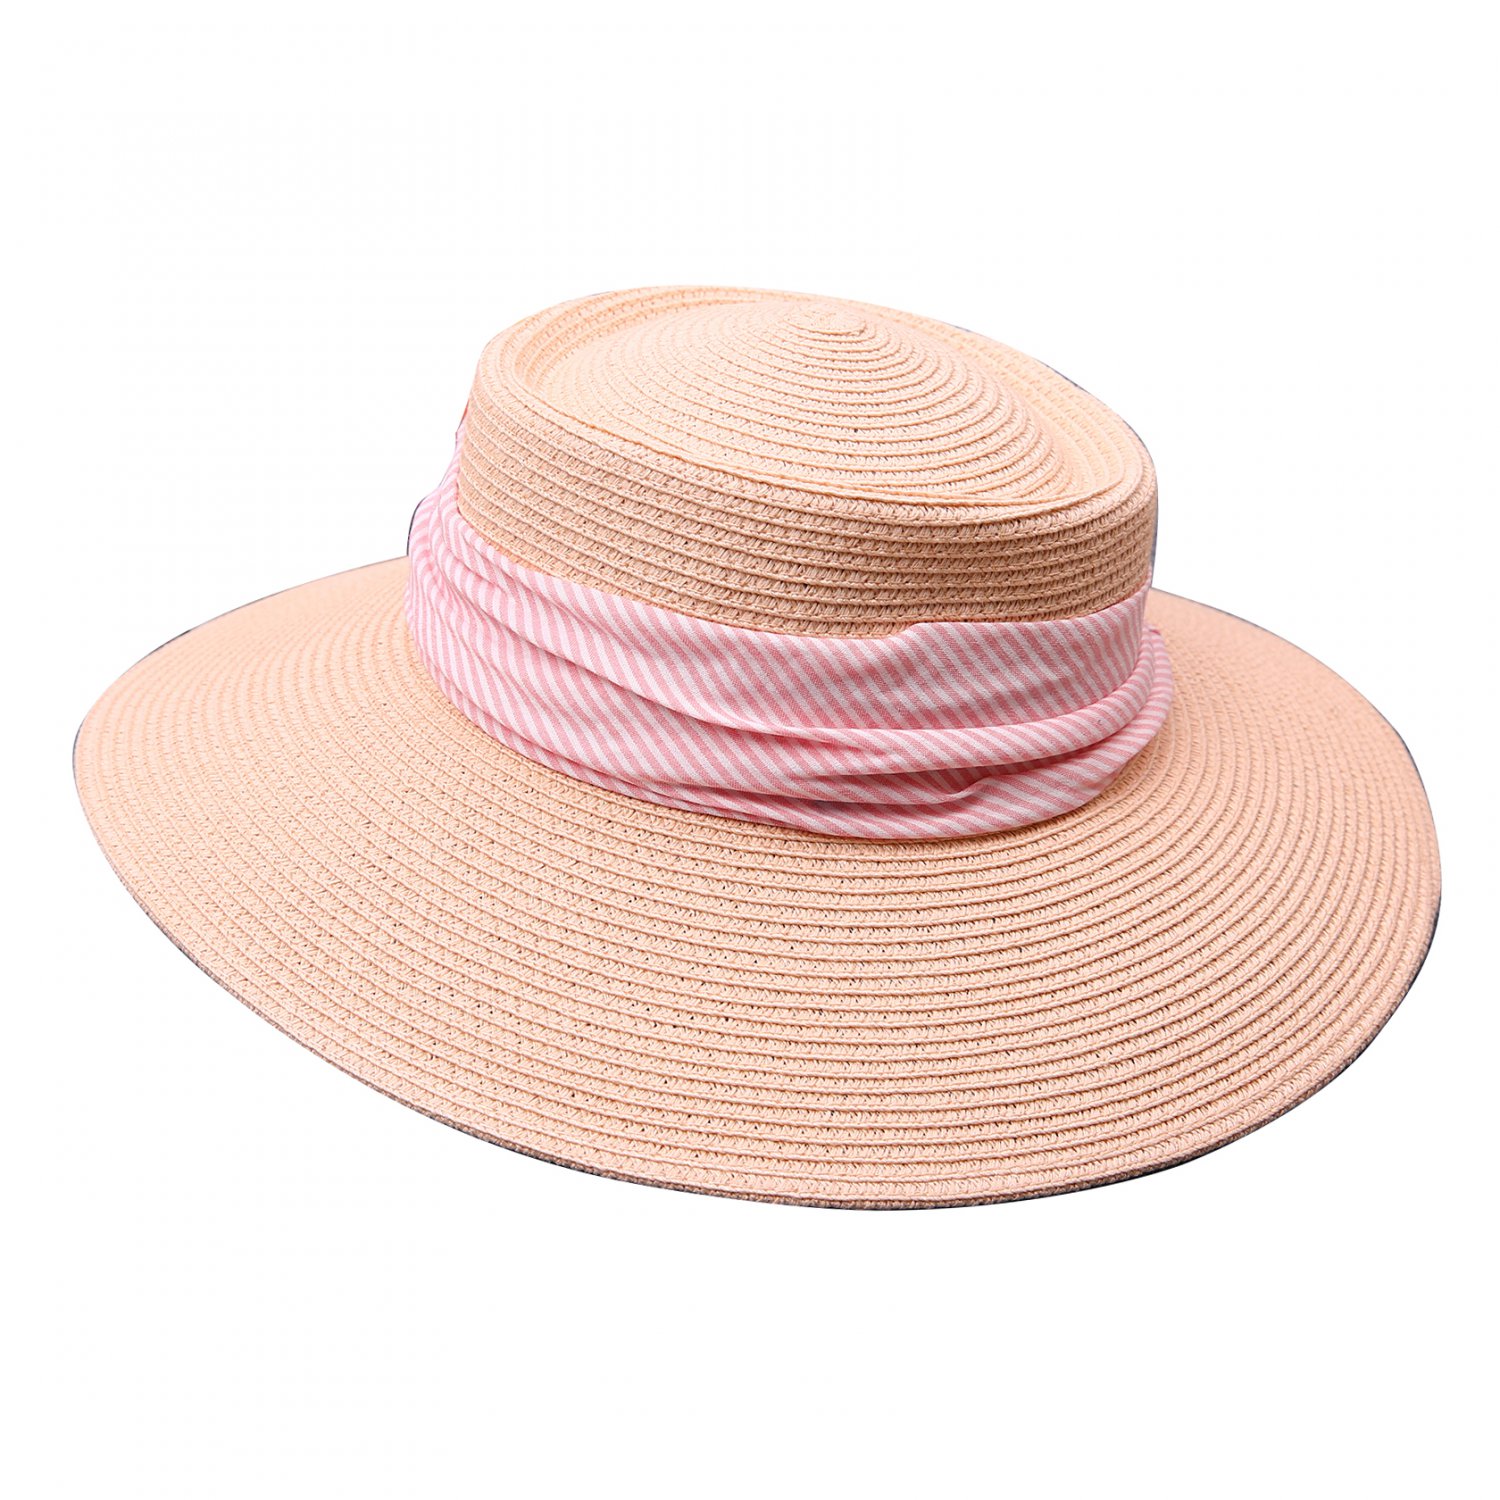 URSFUR Summer Wide Brim Straw Sun Hats for Women UV Protection Beach Cap Ribbon Decoration Pink